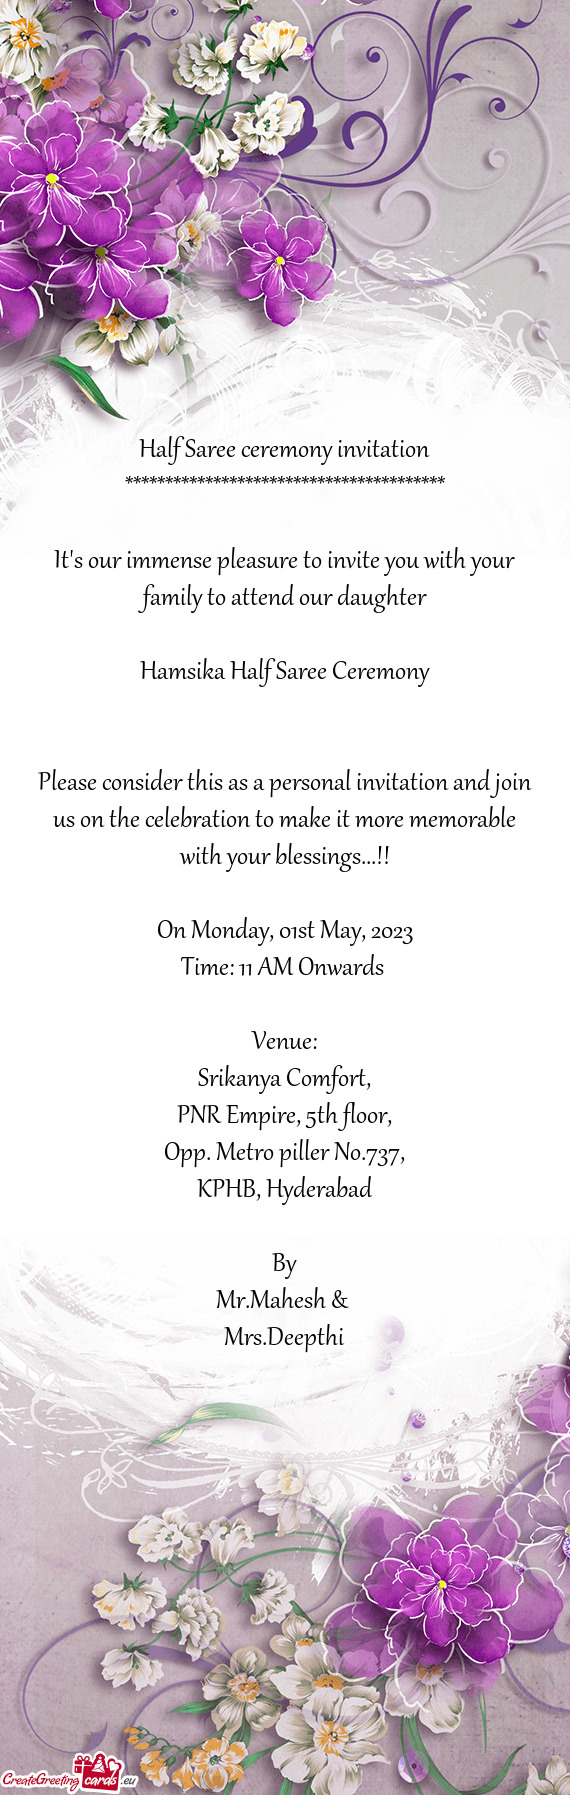 Hamsika Half Saree Ceremony